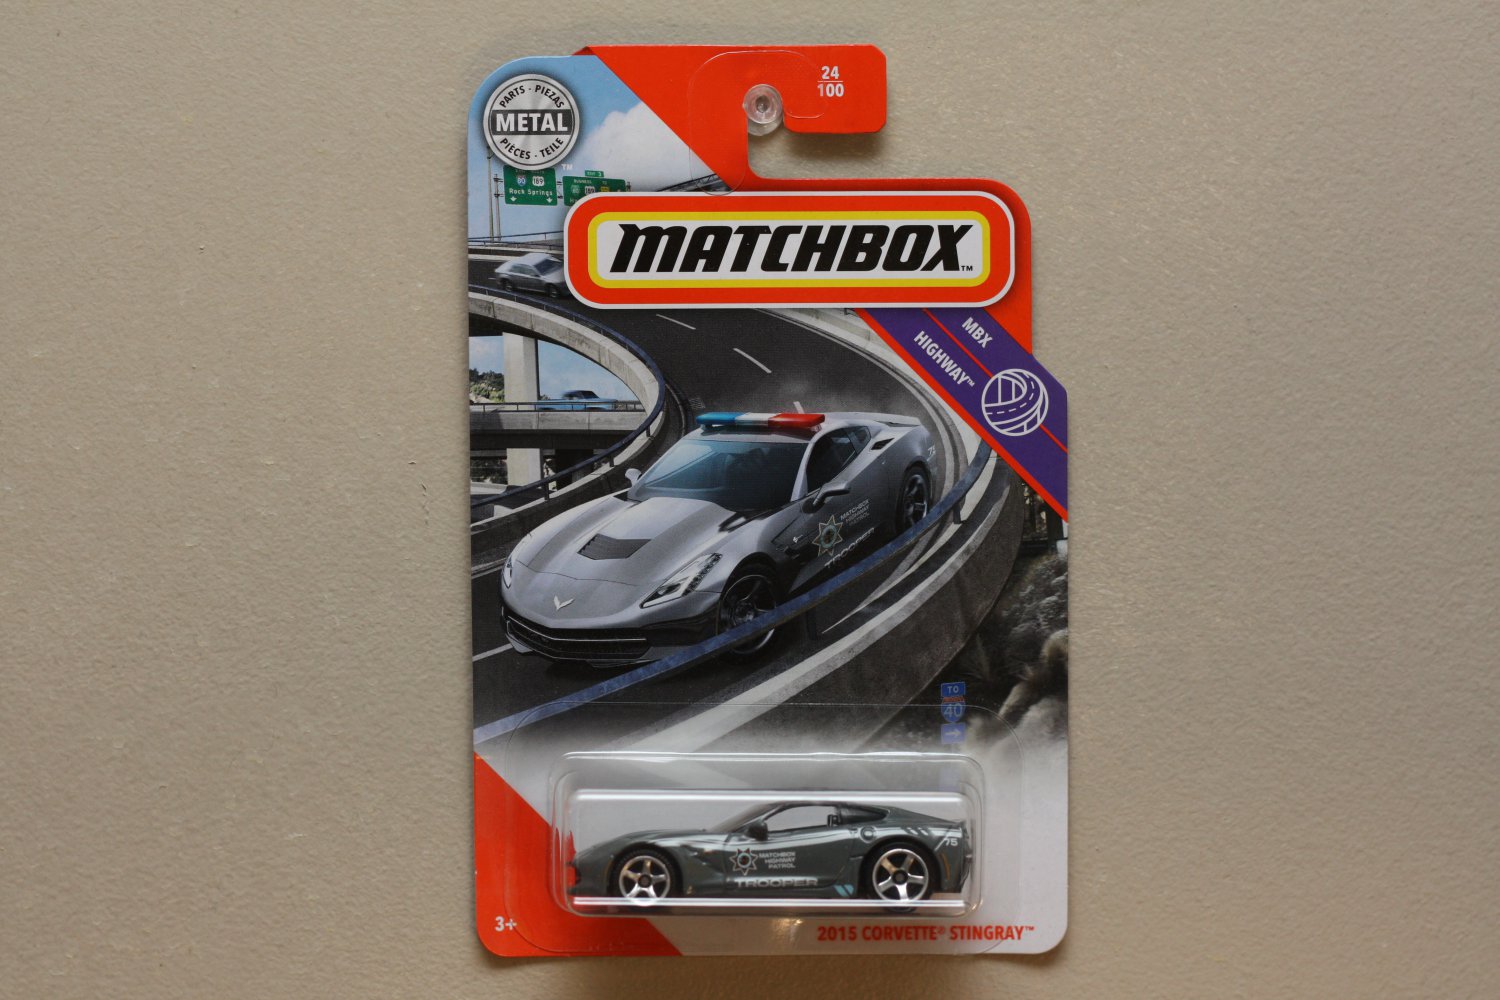 Matchbox 2020 MBX Highway '15 Corvette Stingray (police grey)